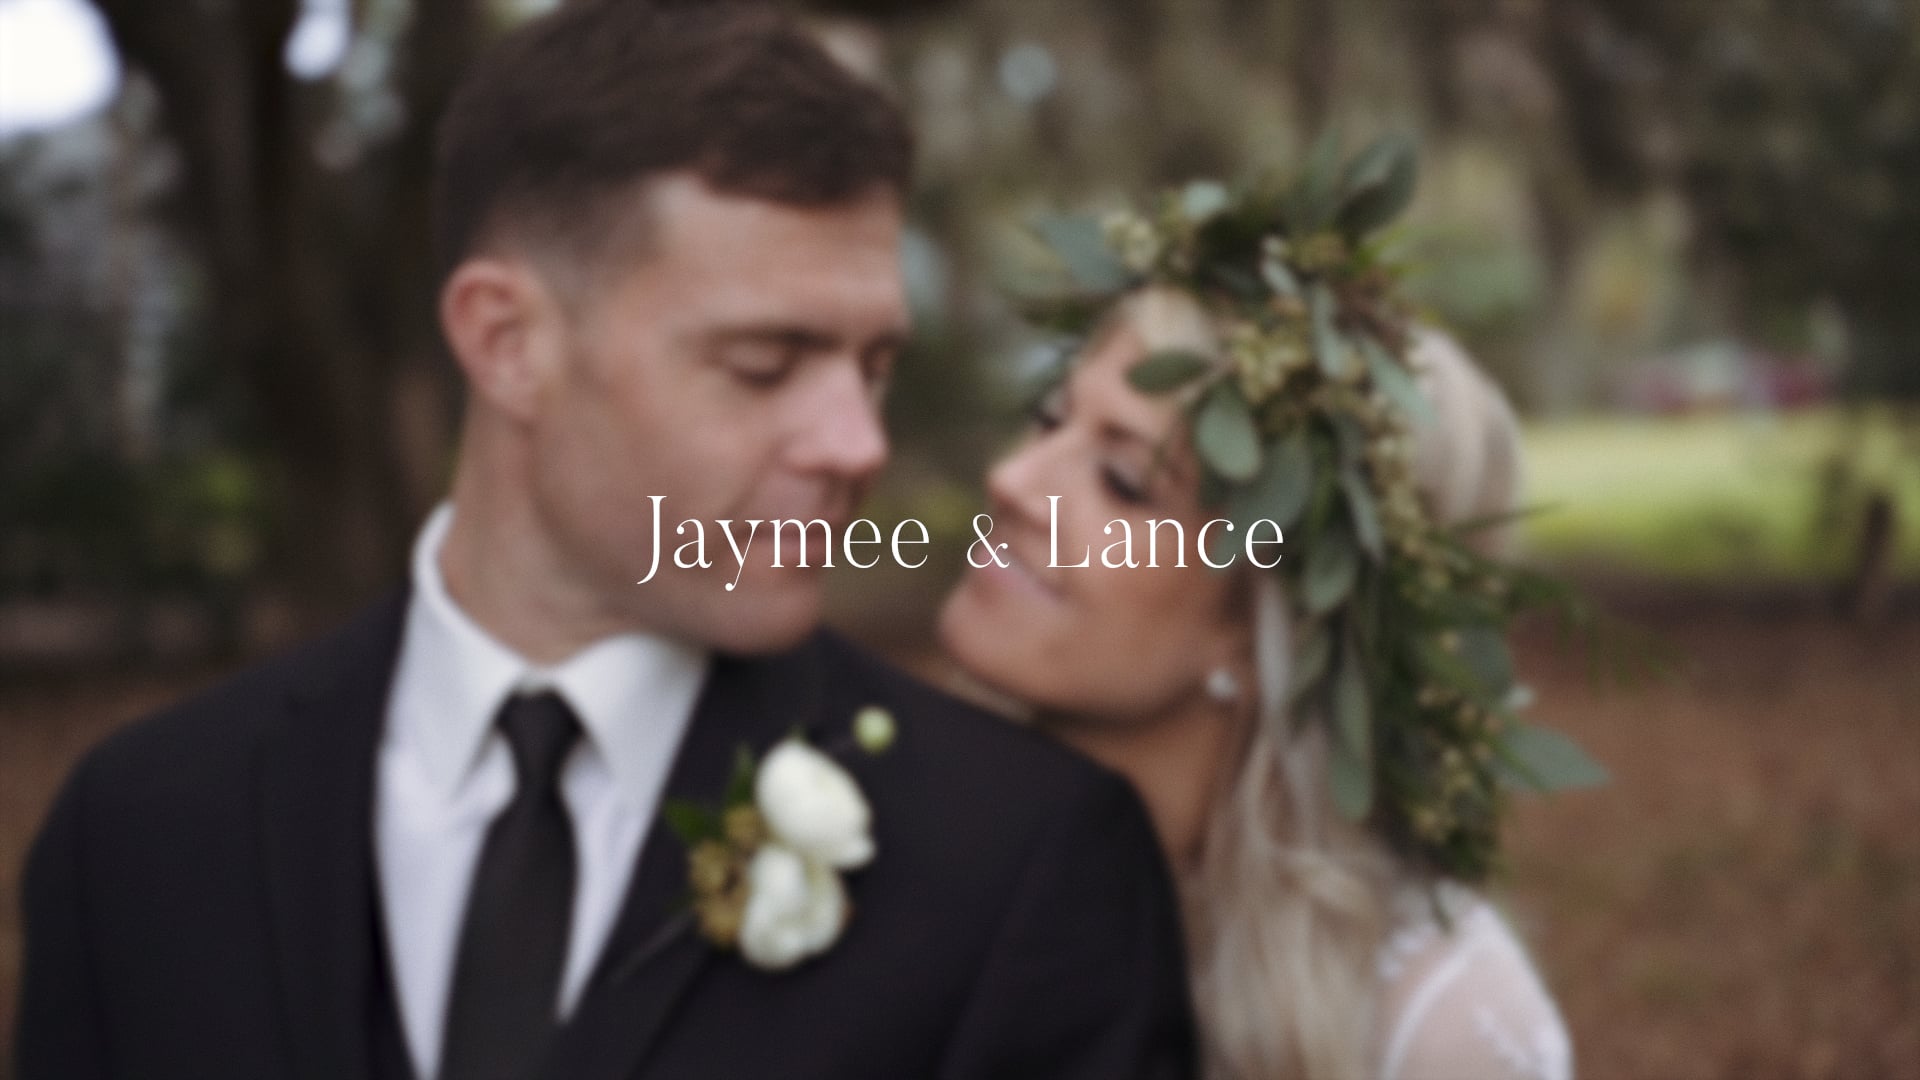 Jaymee and Lance's Wedding Film | Windermere Florida